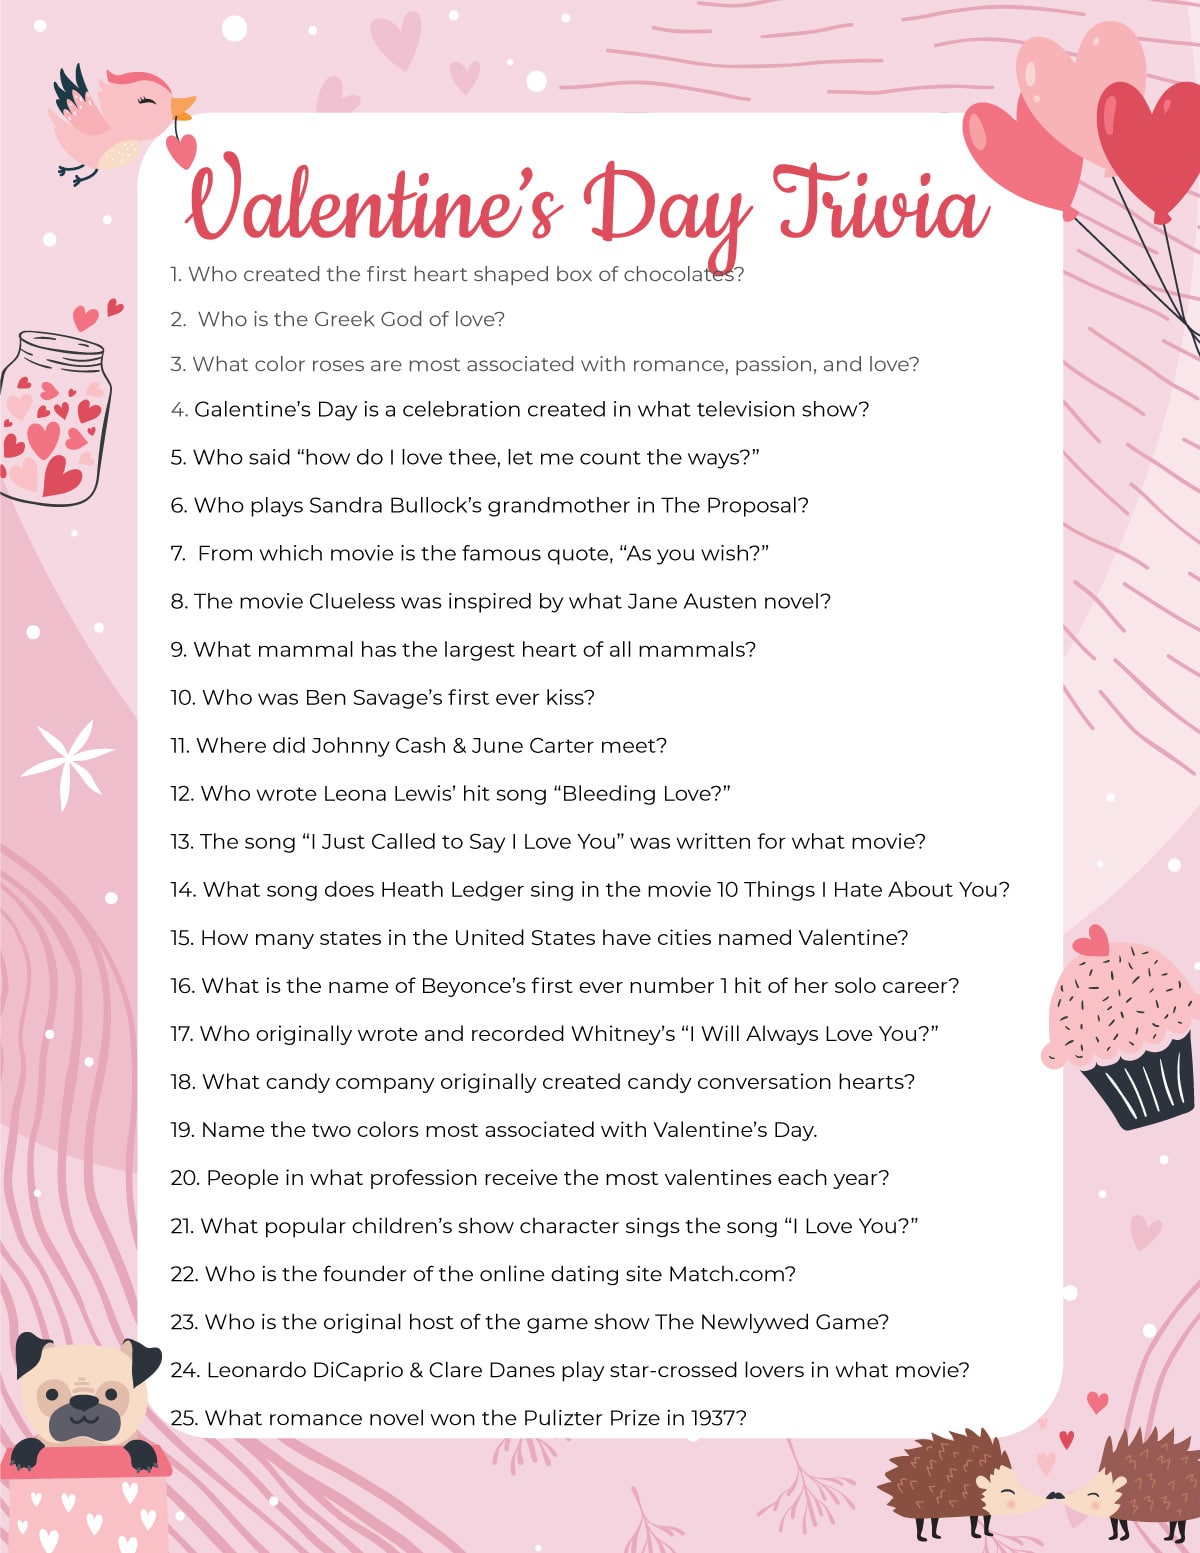 Valentines Day trivia game printable